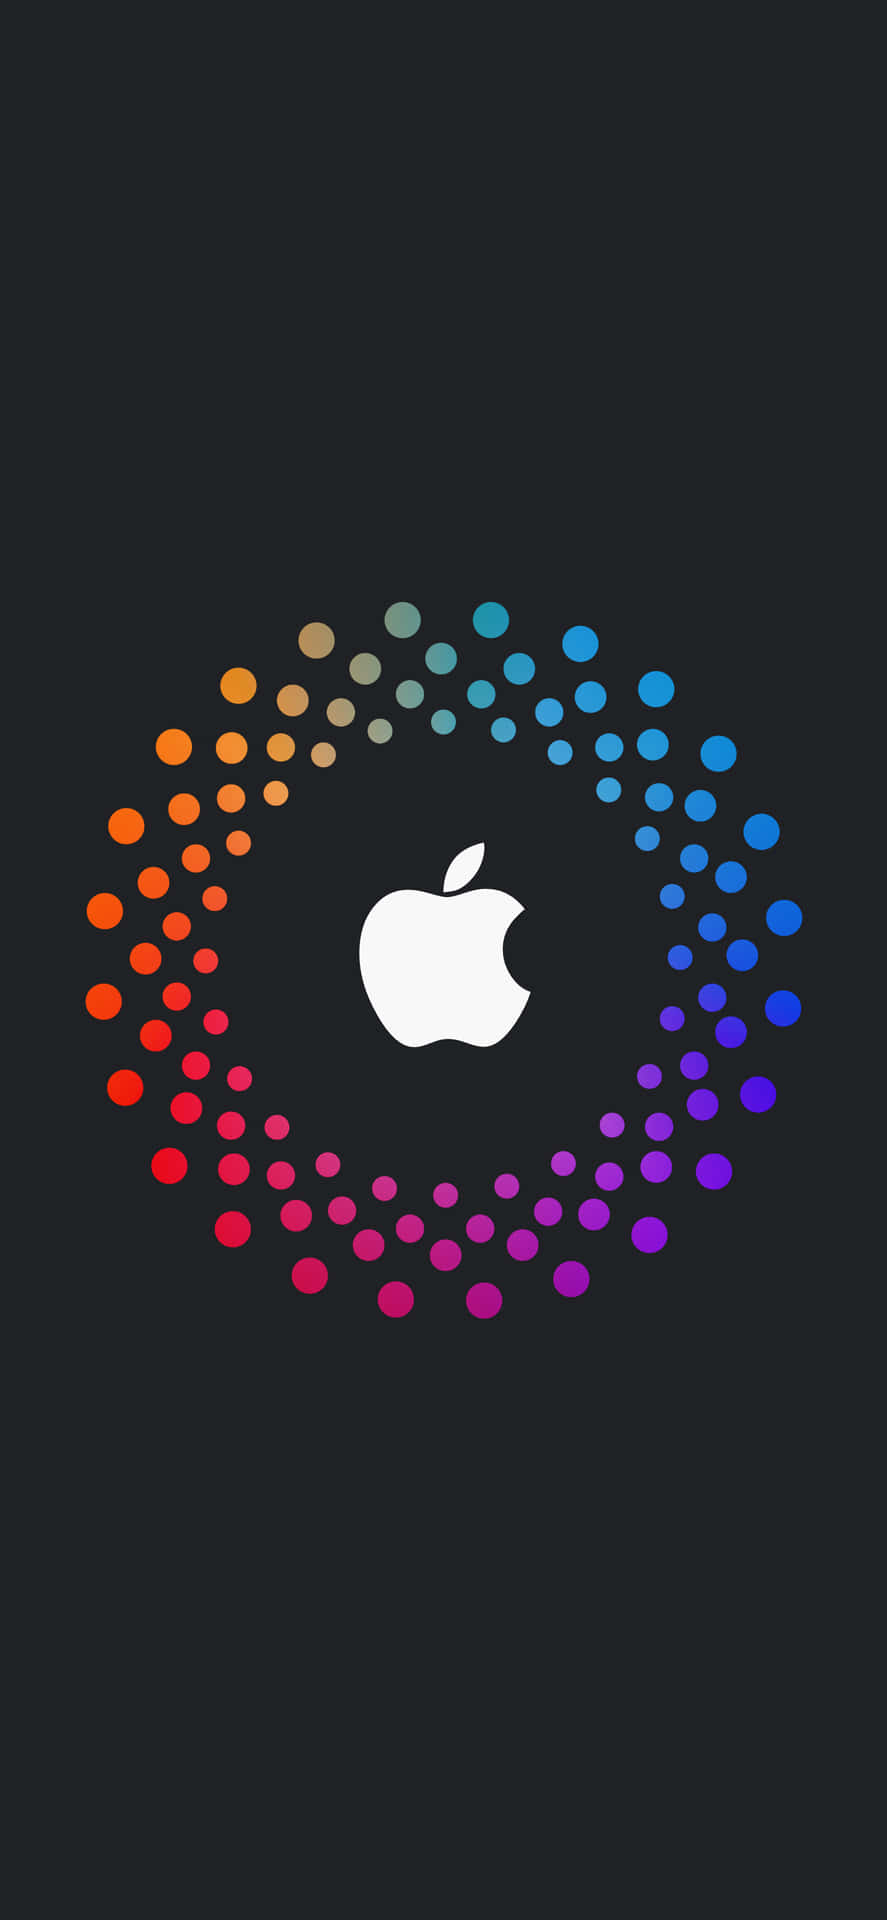 Stunning Visual Experience - Amazing Apple Hd Iphone Wallpaper